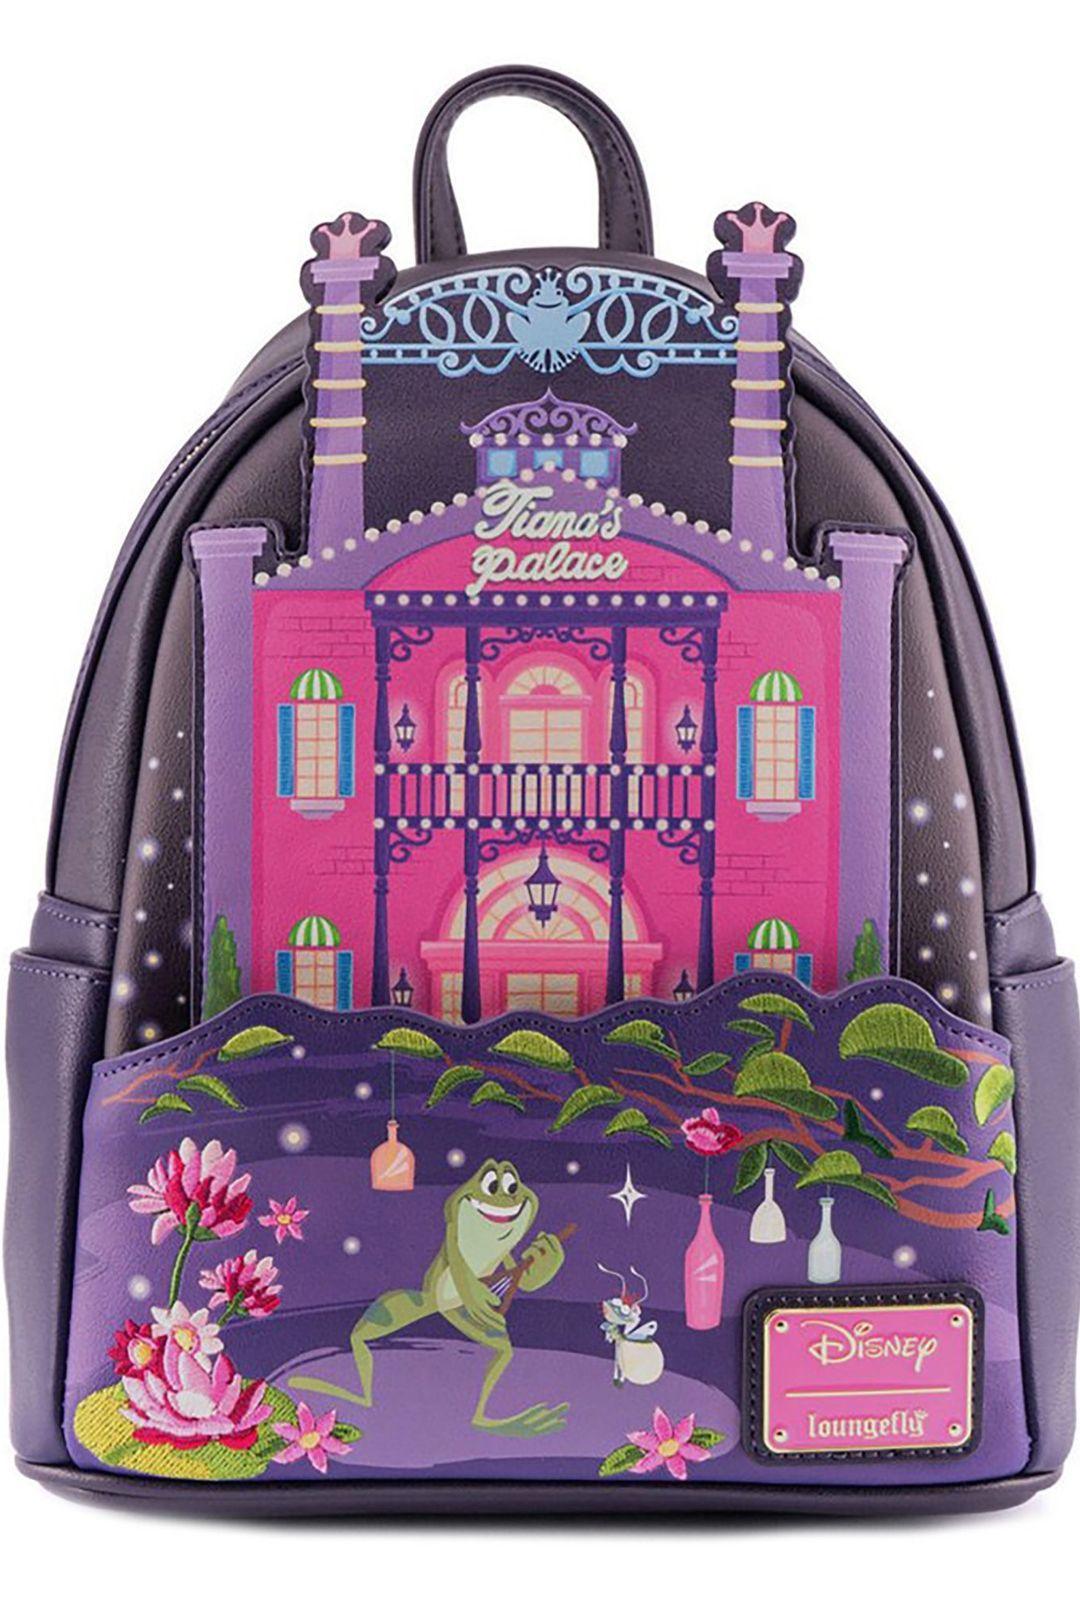 LOUWDBK1872 The Princess and the Frog - Tiana's Palace Mini Backpack - Loungefly - Titan Pop Culture